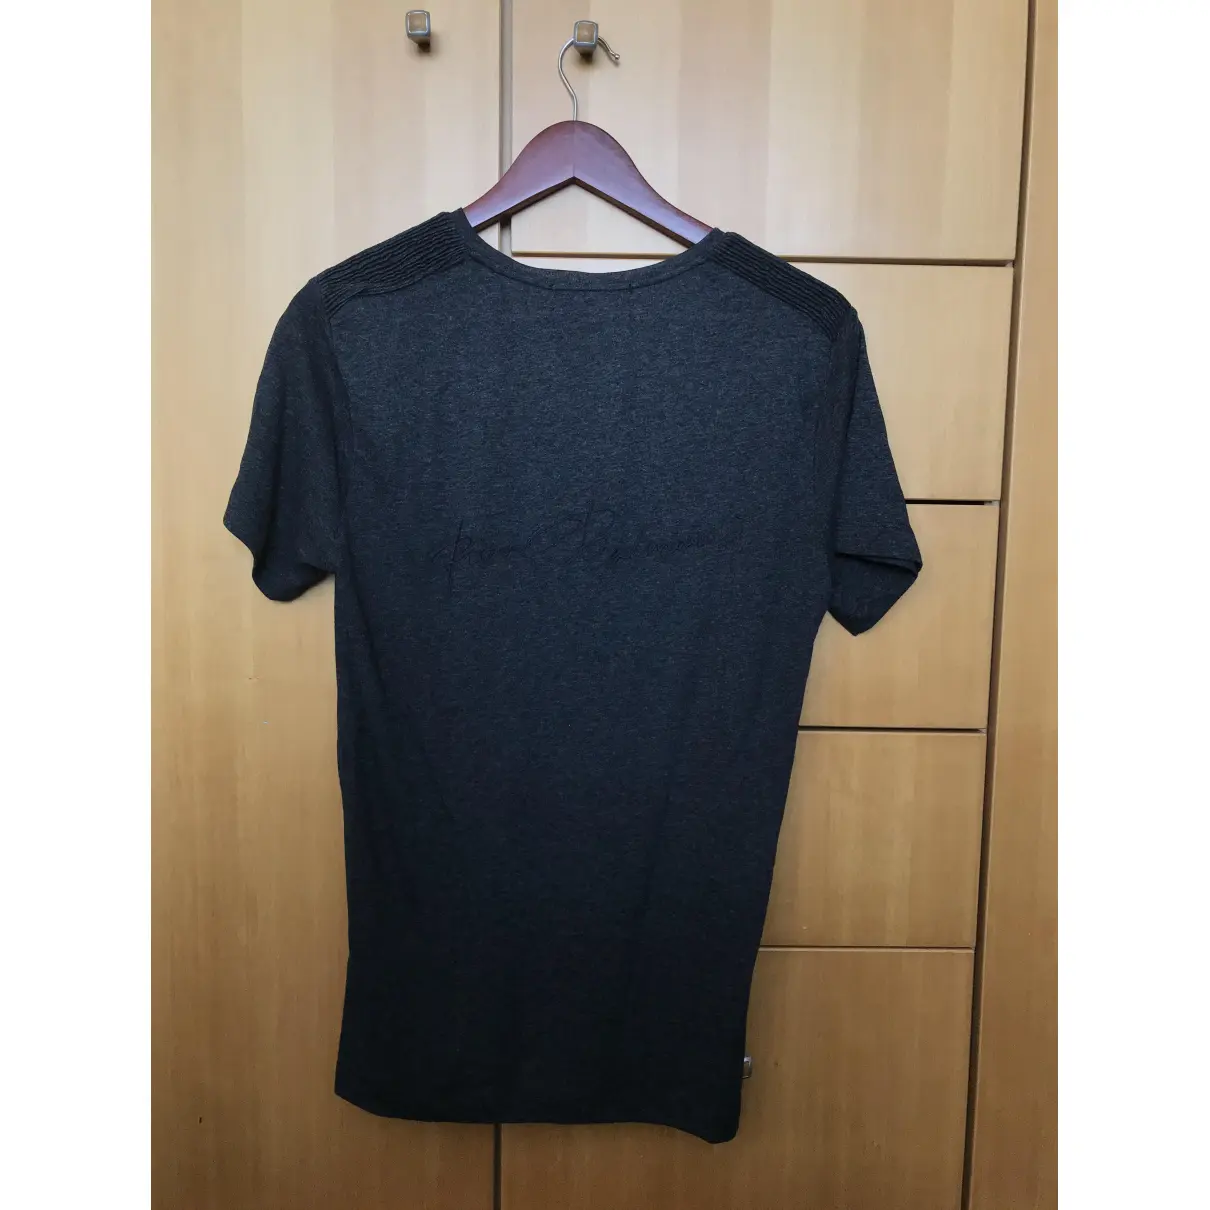 Buy Pierre Balmain Grey Cotton T-shirt online